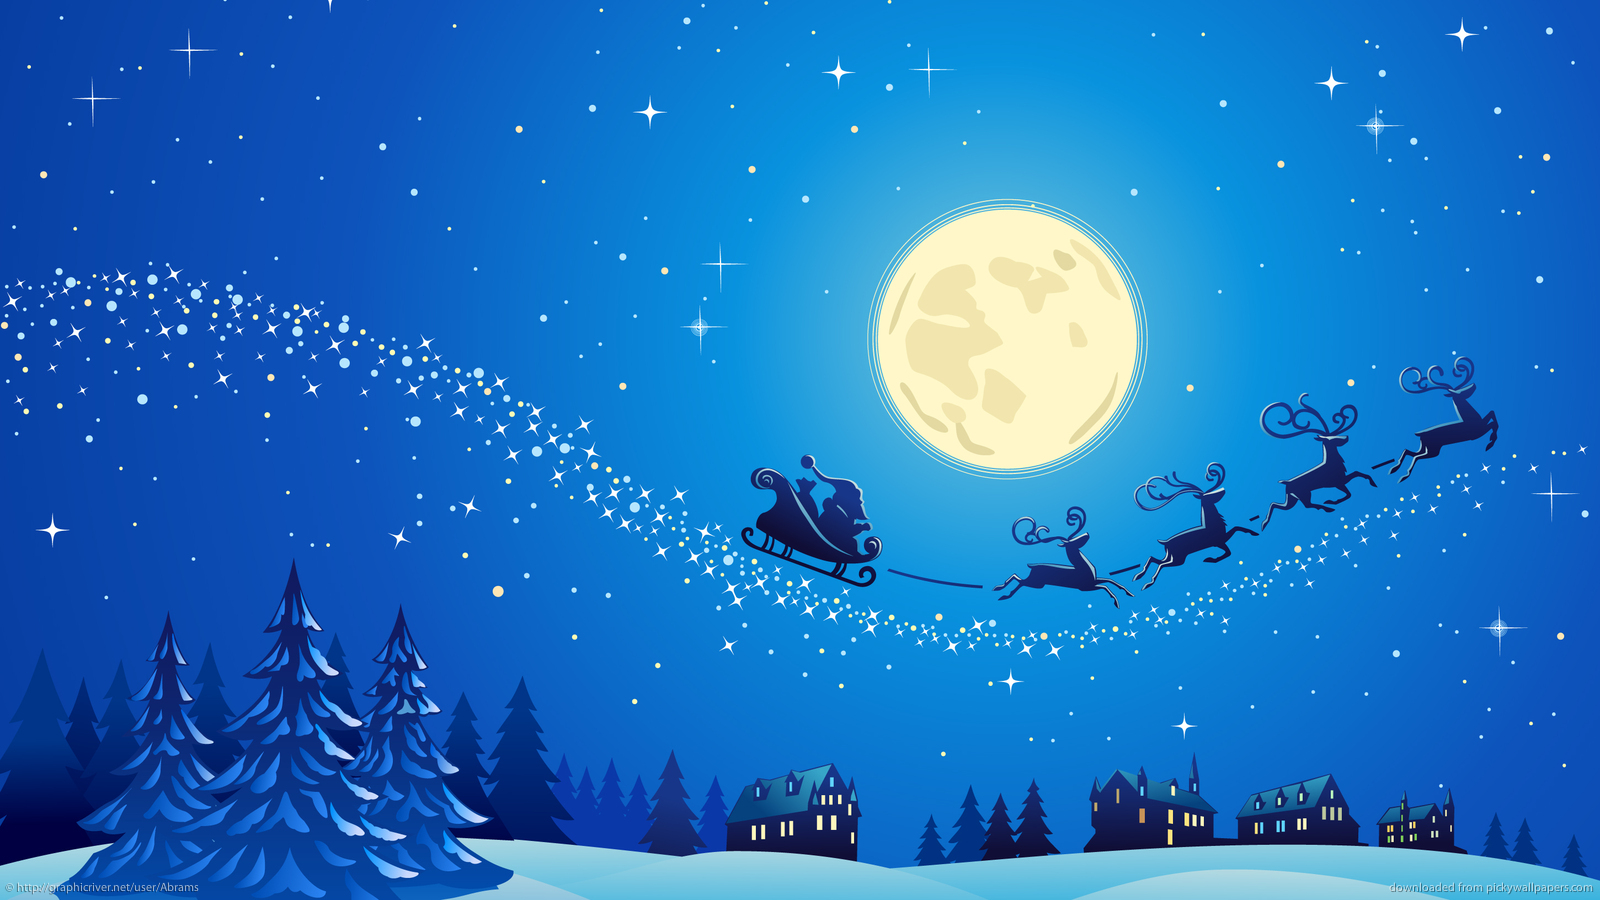 Download 1600x900 Santa Into The Winter Christmas Night 2 Wallpaper